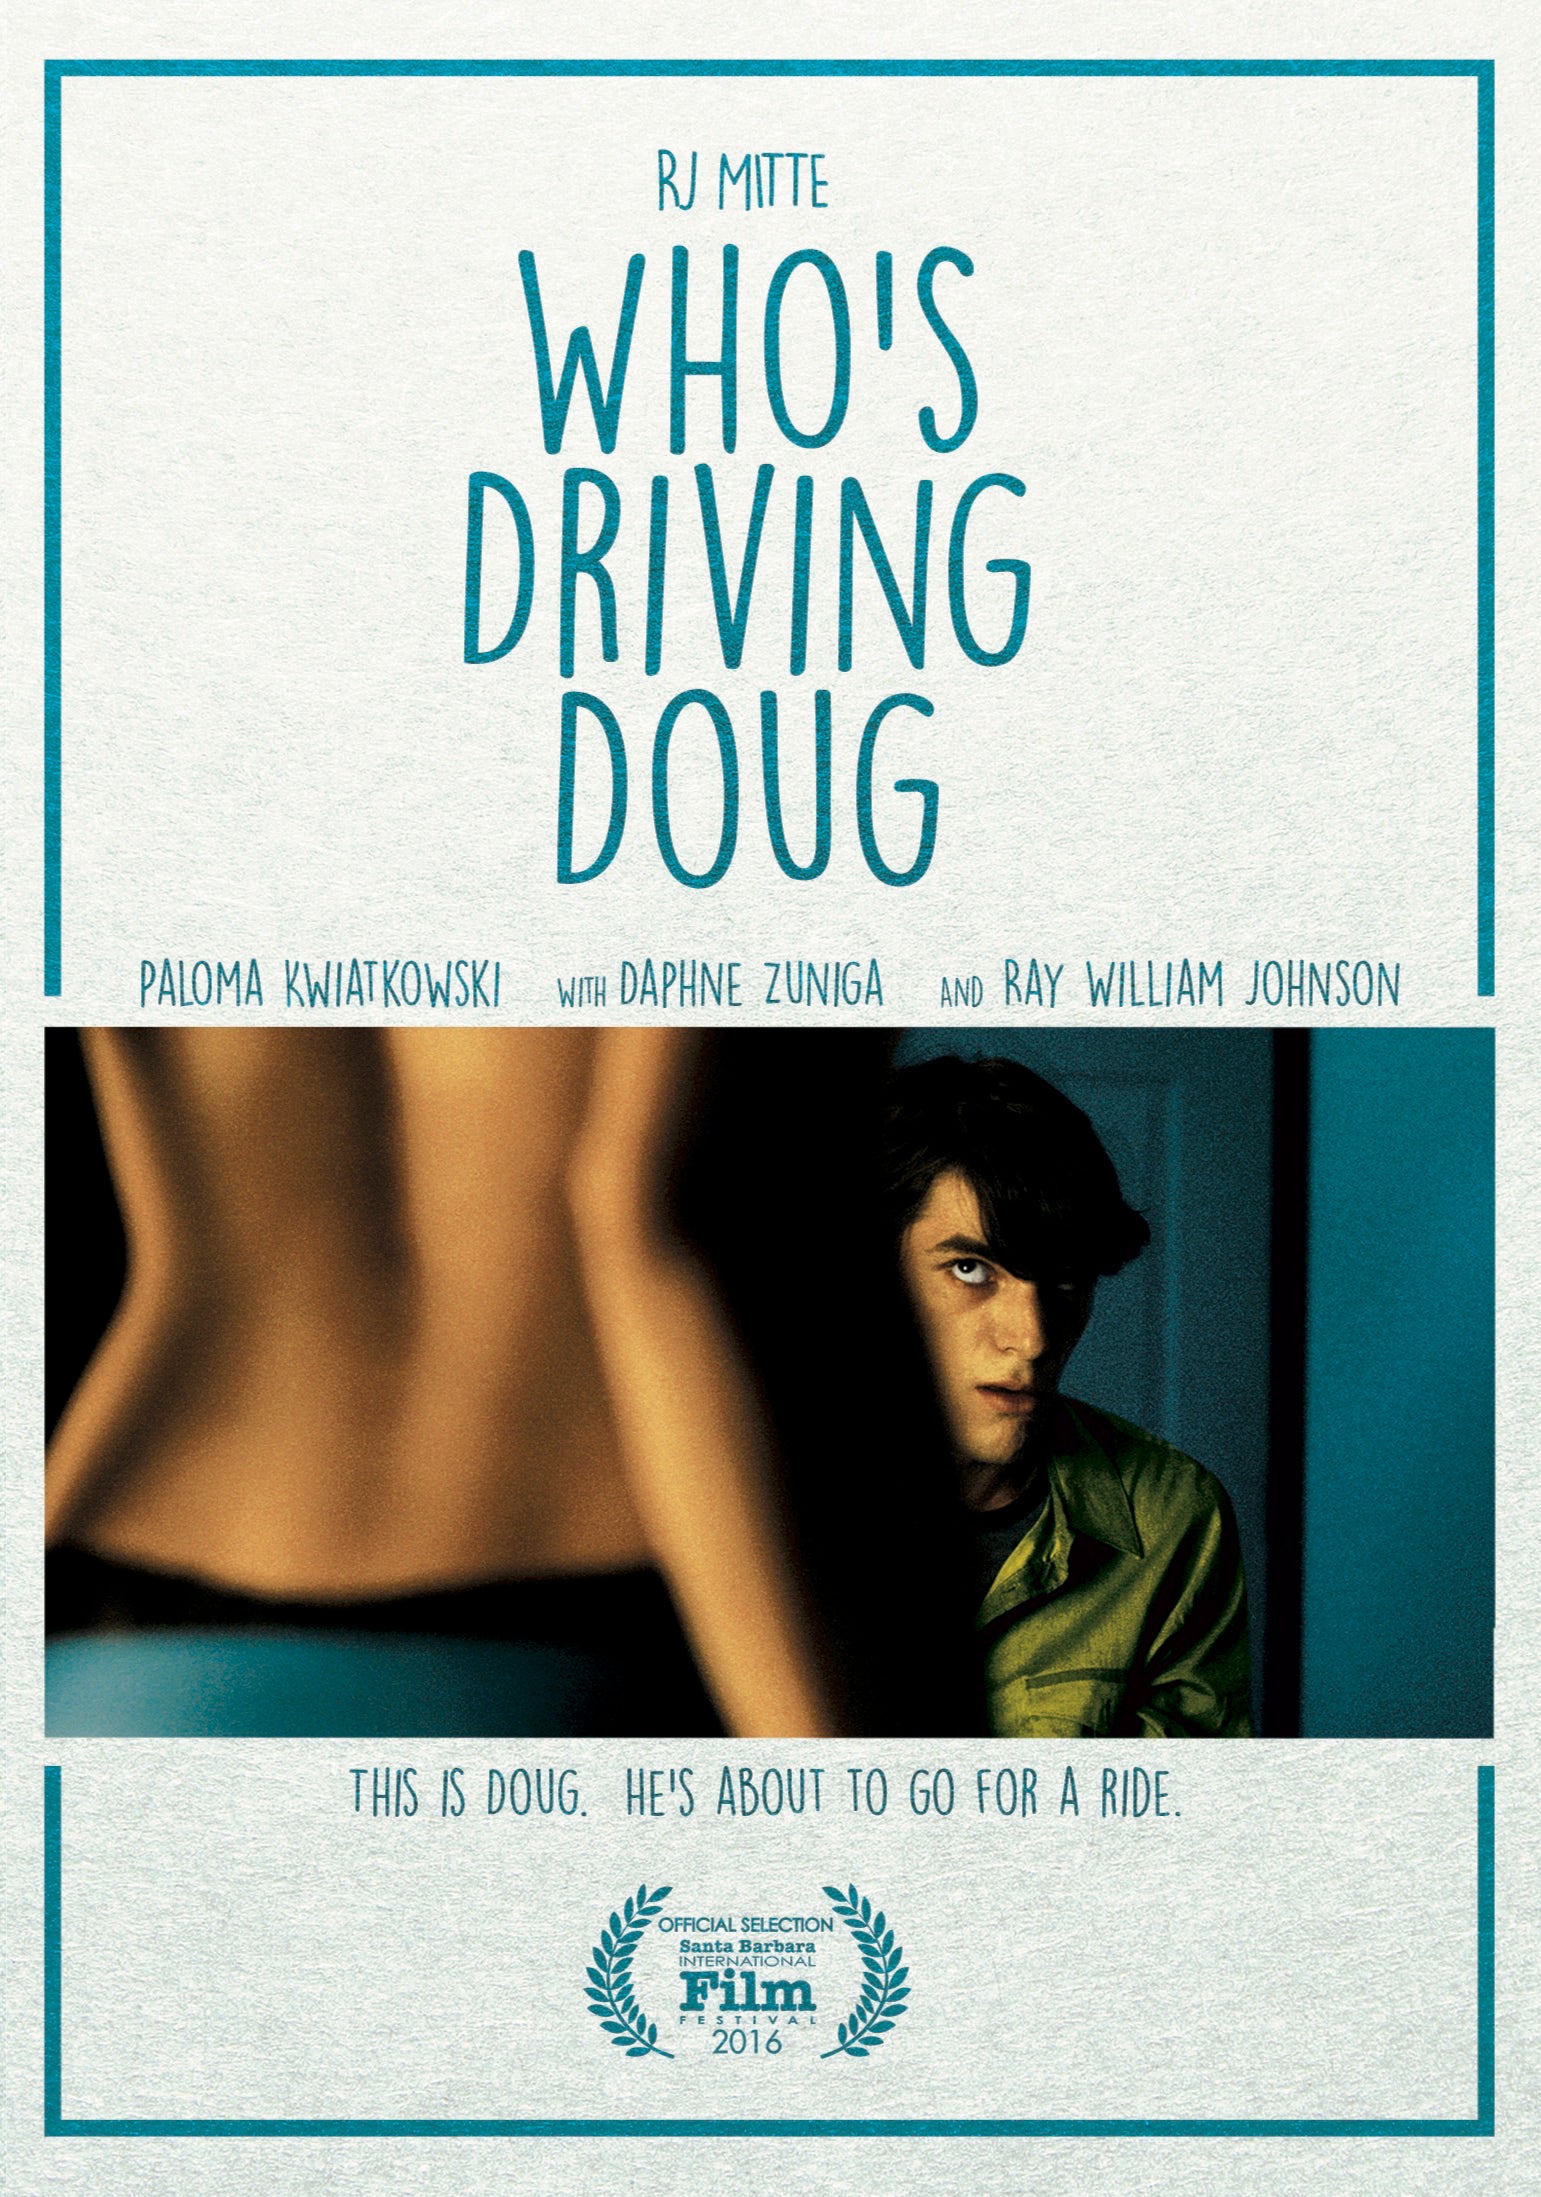 Who's Driving Doug cover art